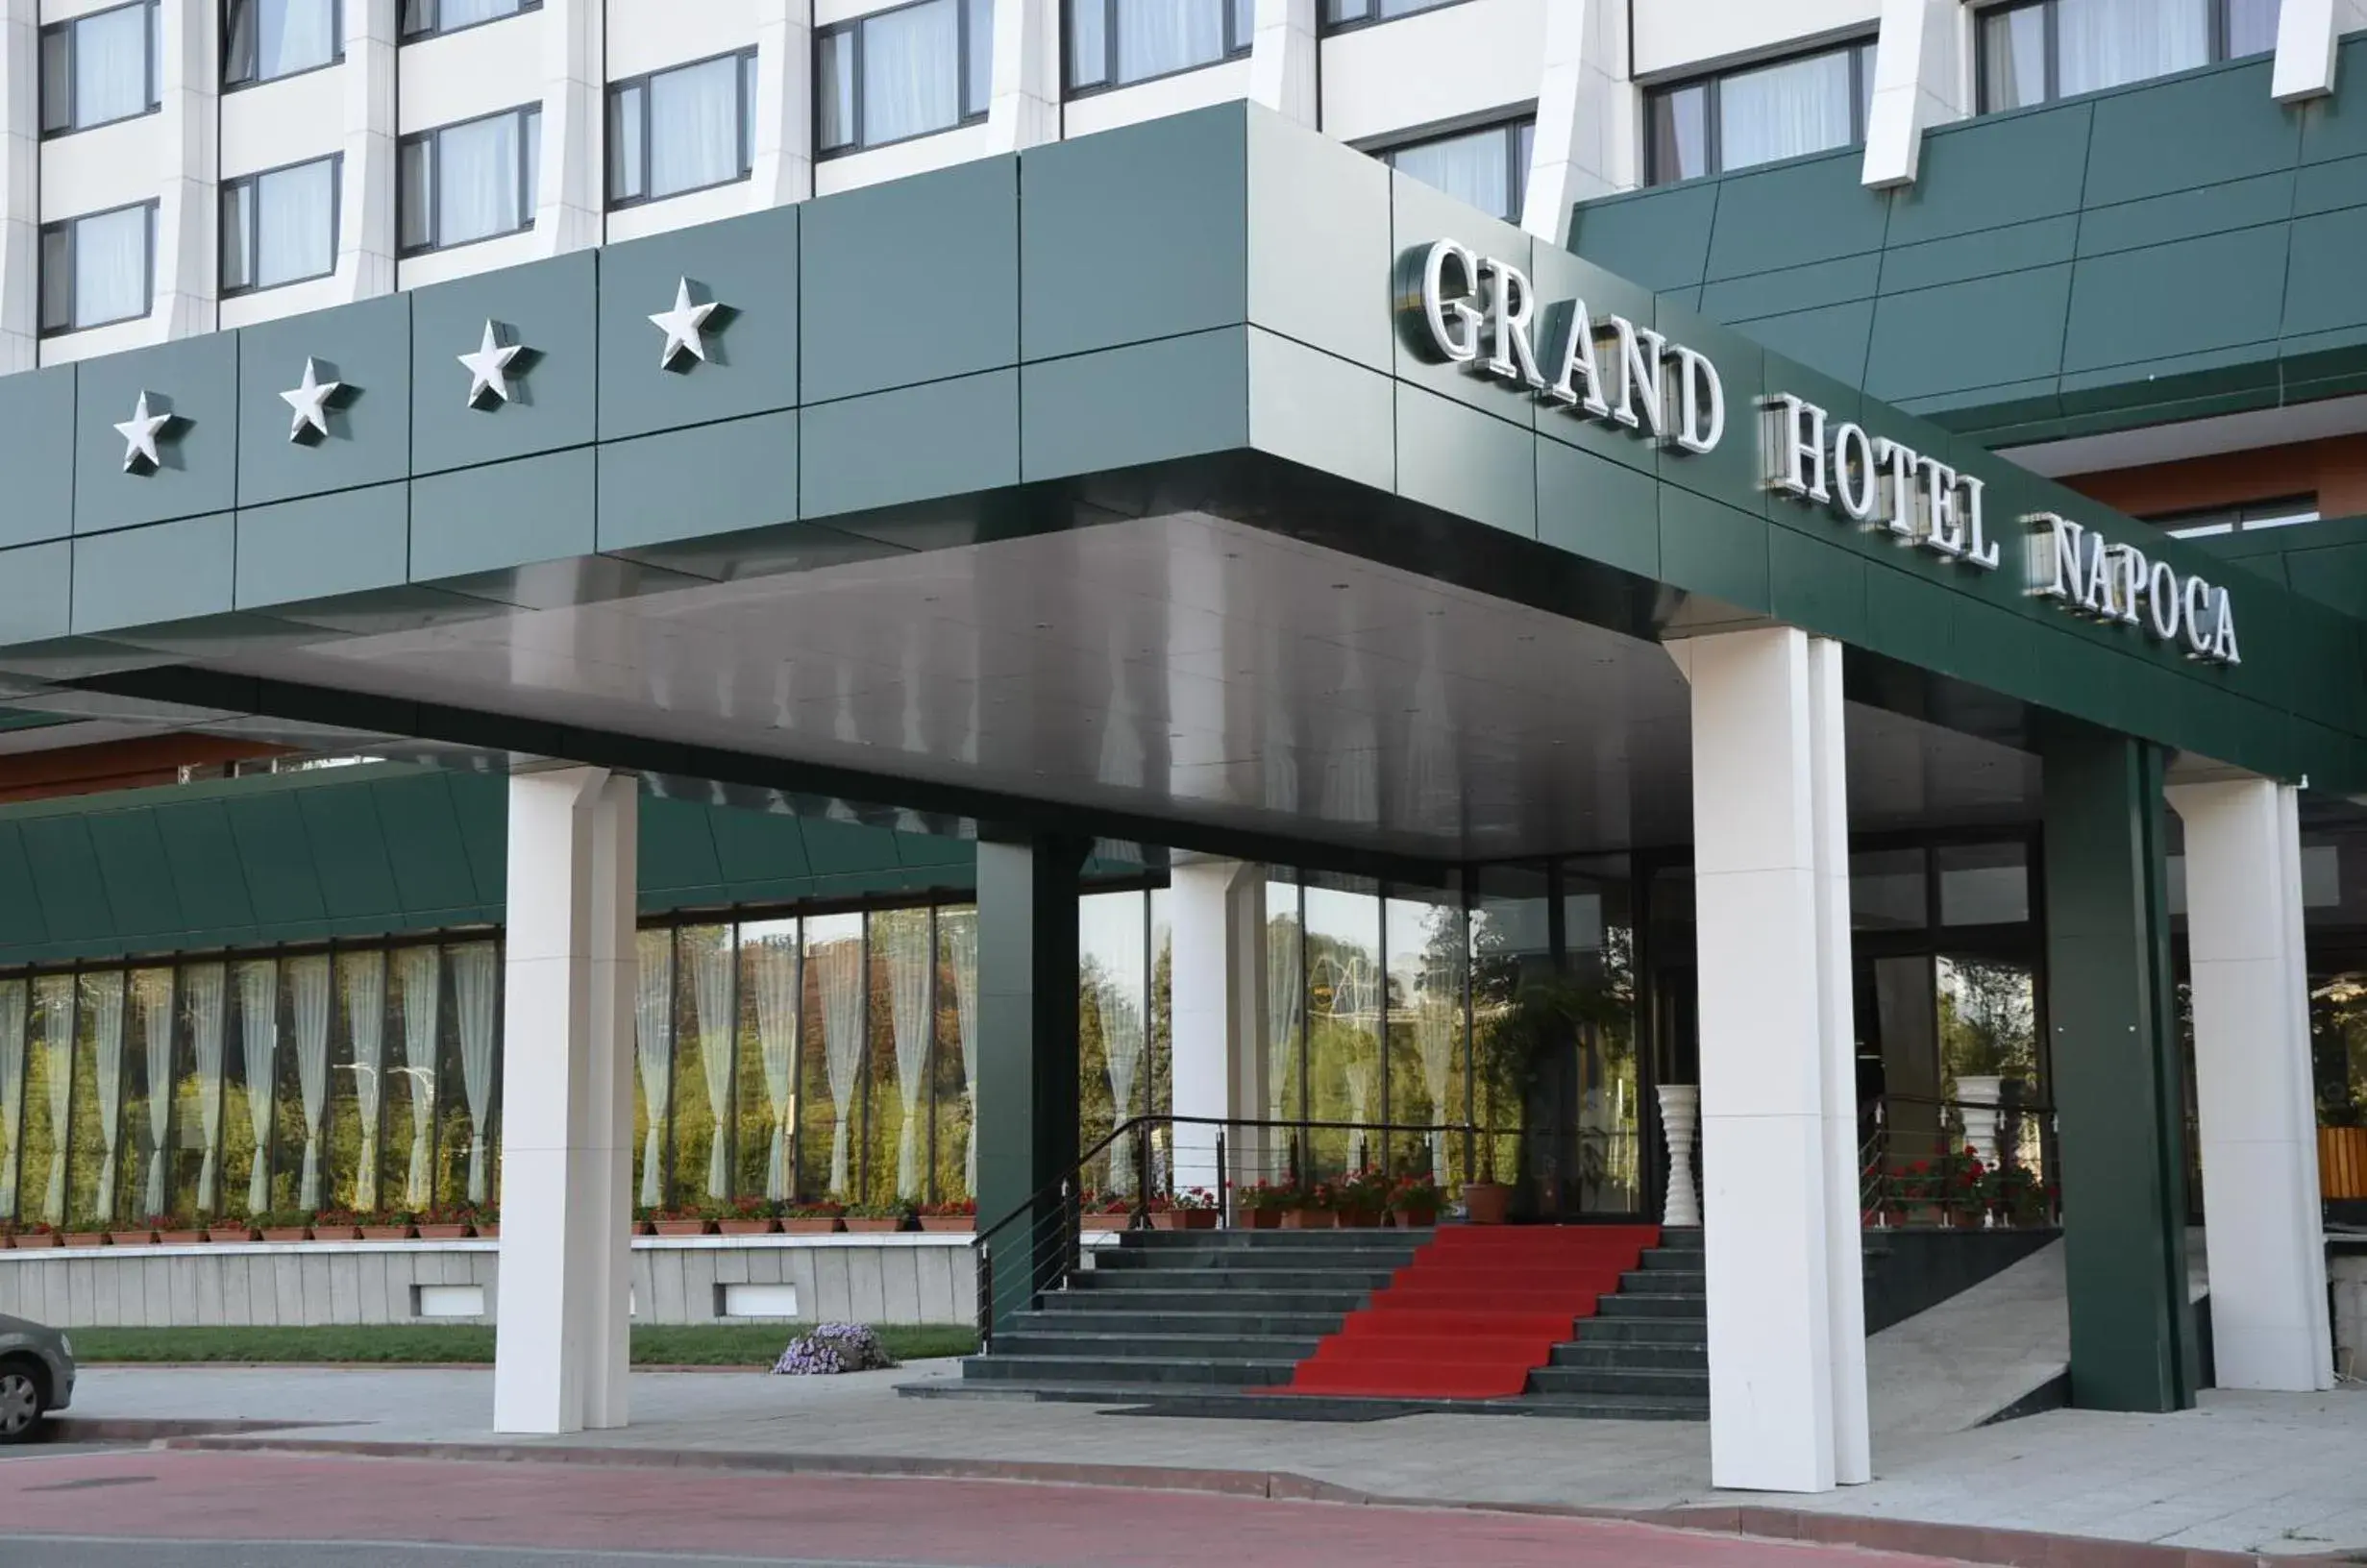 Bird's eye view, Property Building in Grand Hotel Napoca